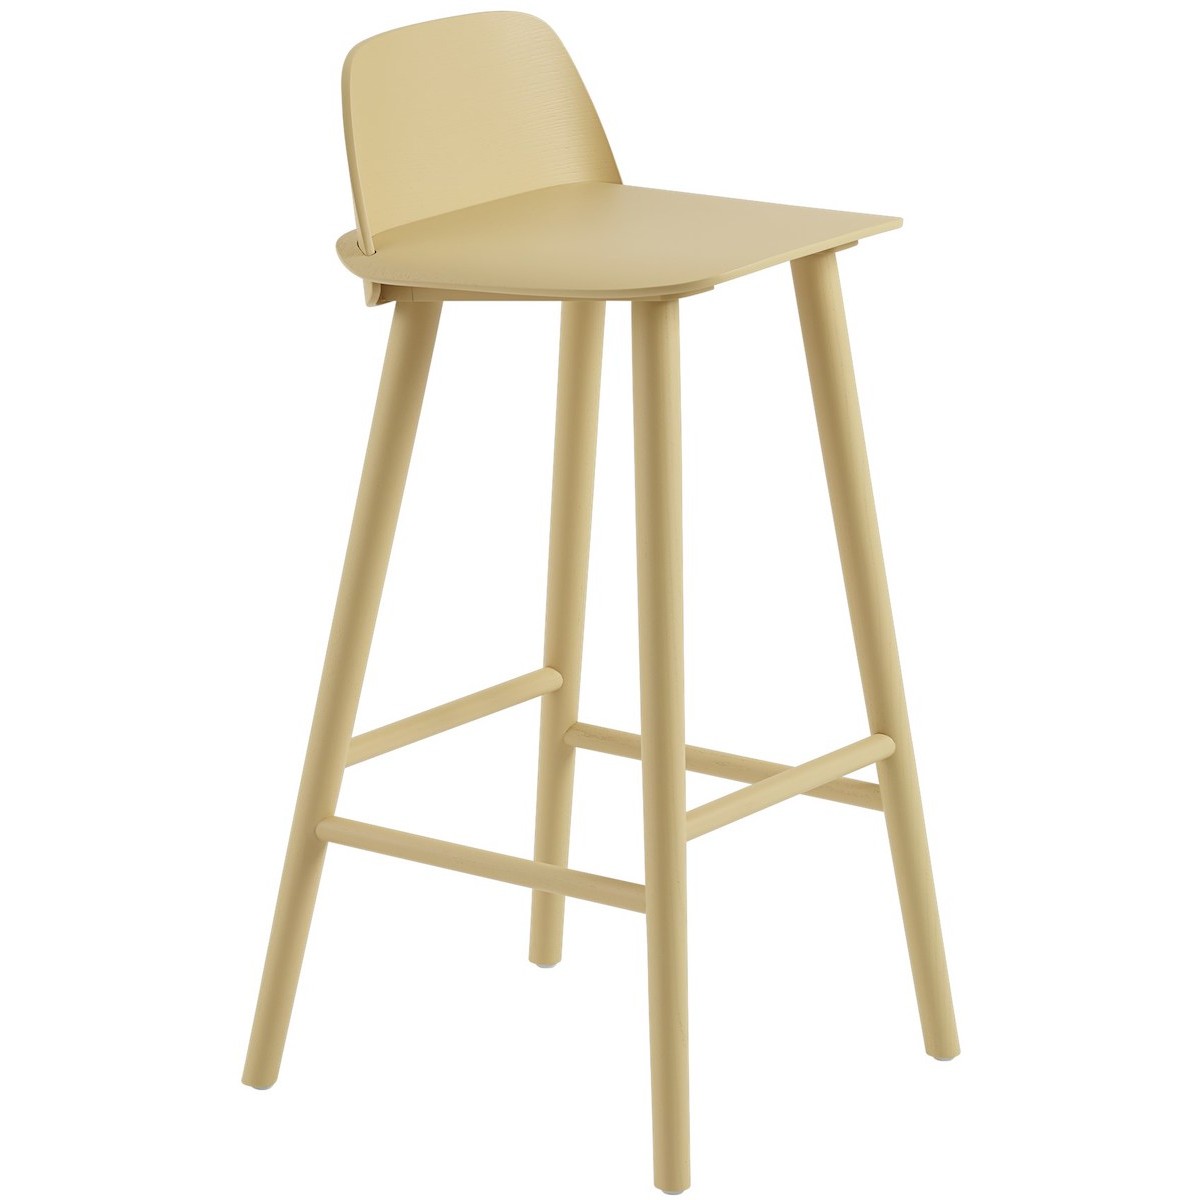 sand yellow - Nerd bar or counter stool